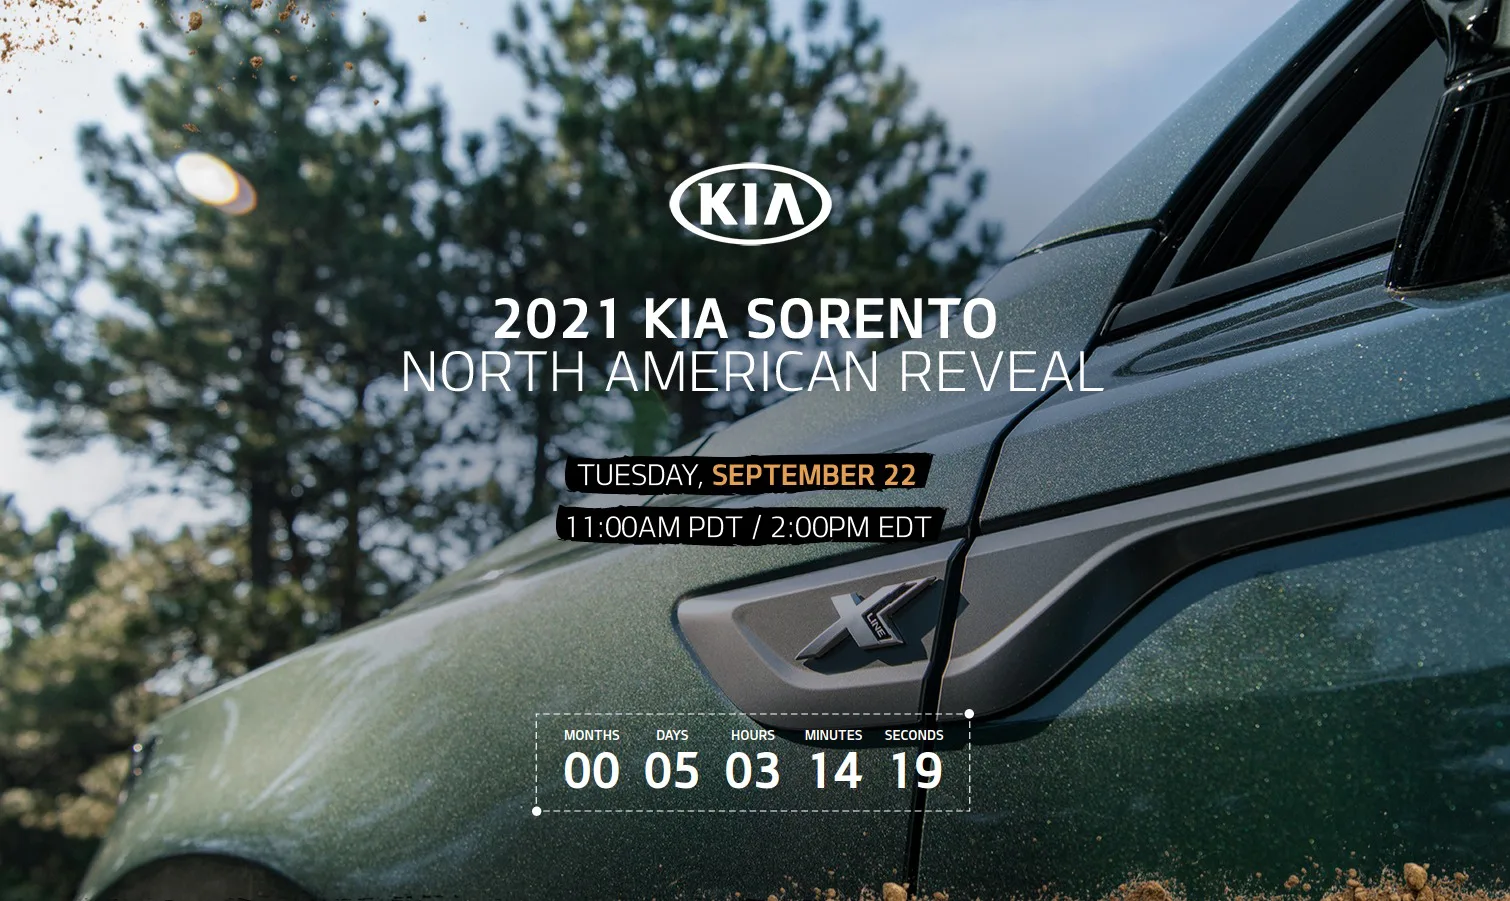 US-Spec Kia Sorento Will Debut on Sept. 22th - Korean Car Blog